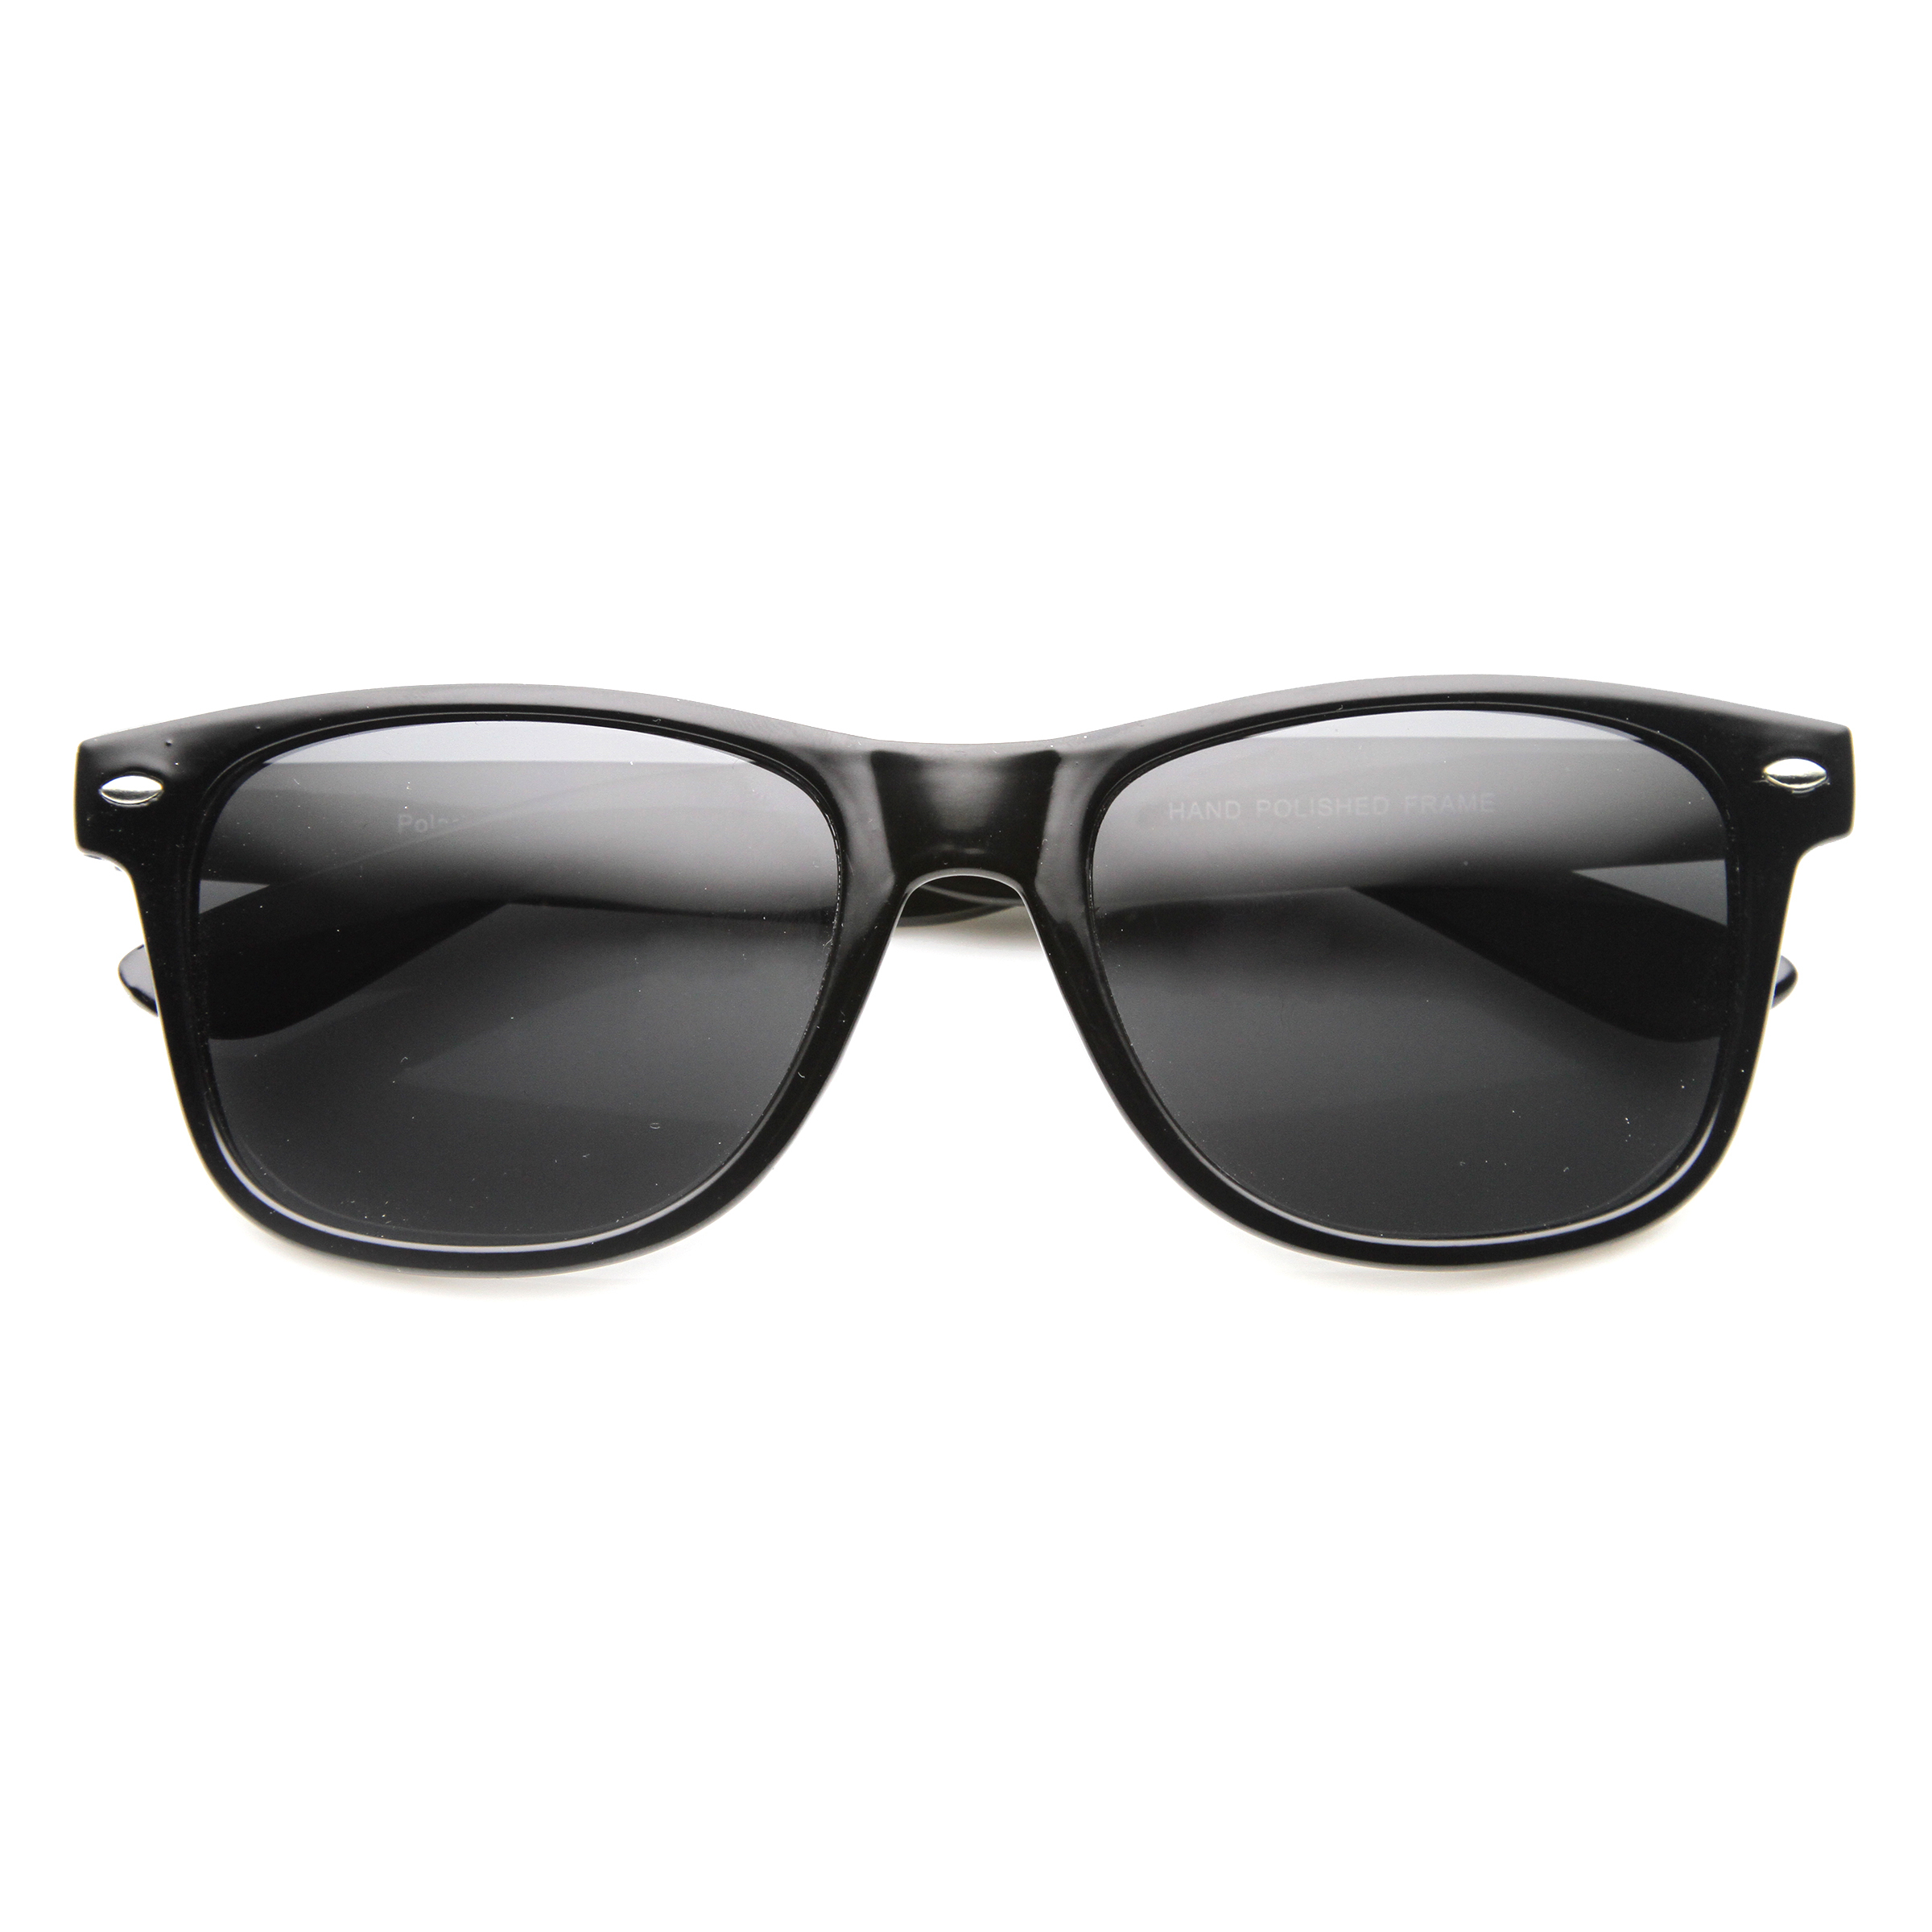 Classic 80s Retro Large Classic Horned Rim Style Sunglasses Eyewear - 8452 - Black / Glass Lens